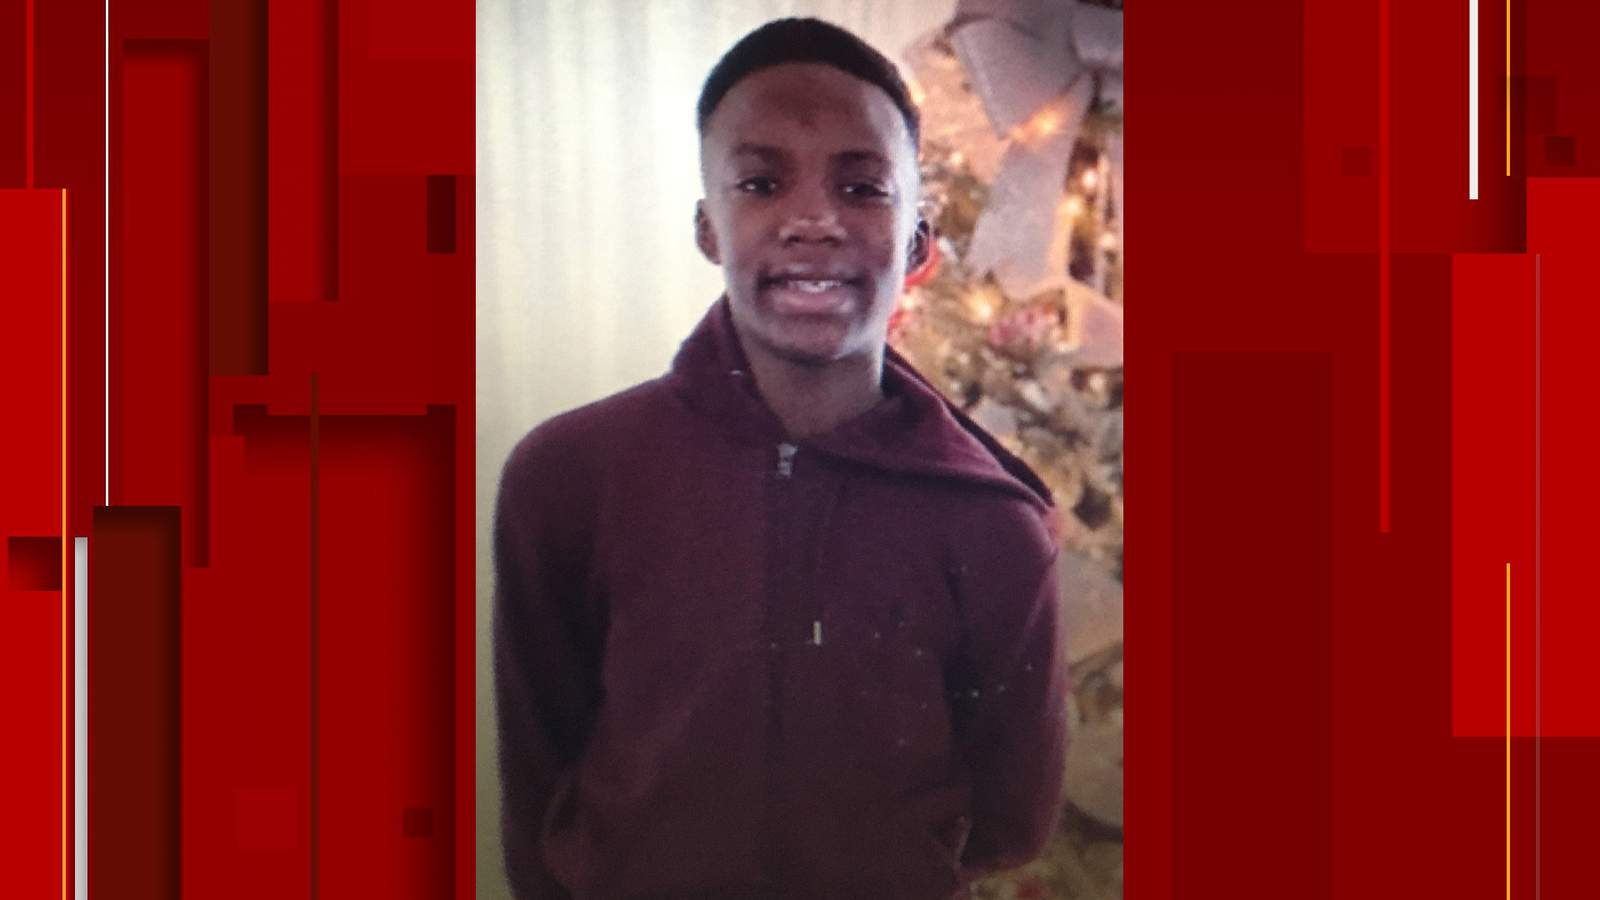 Missing 13-year-old Virginia boy found safe